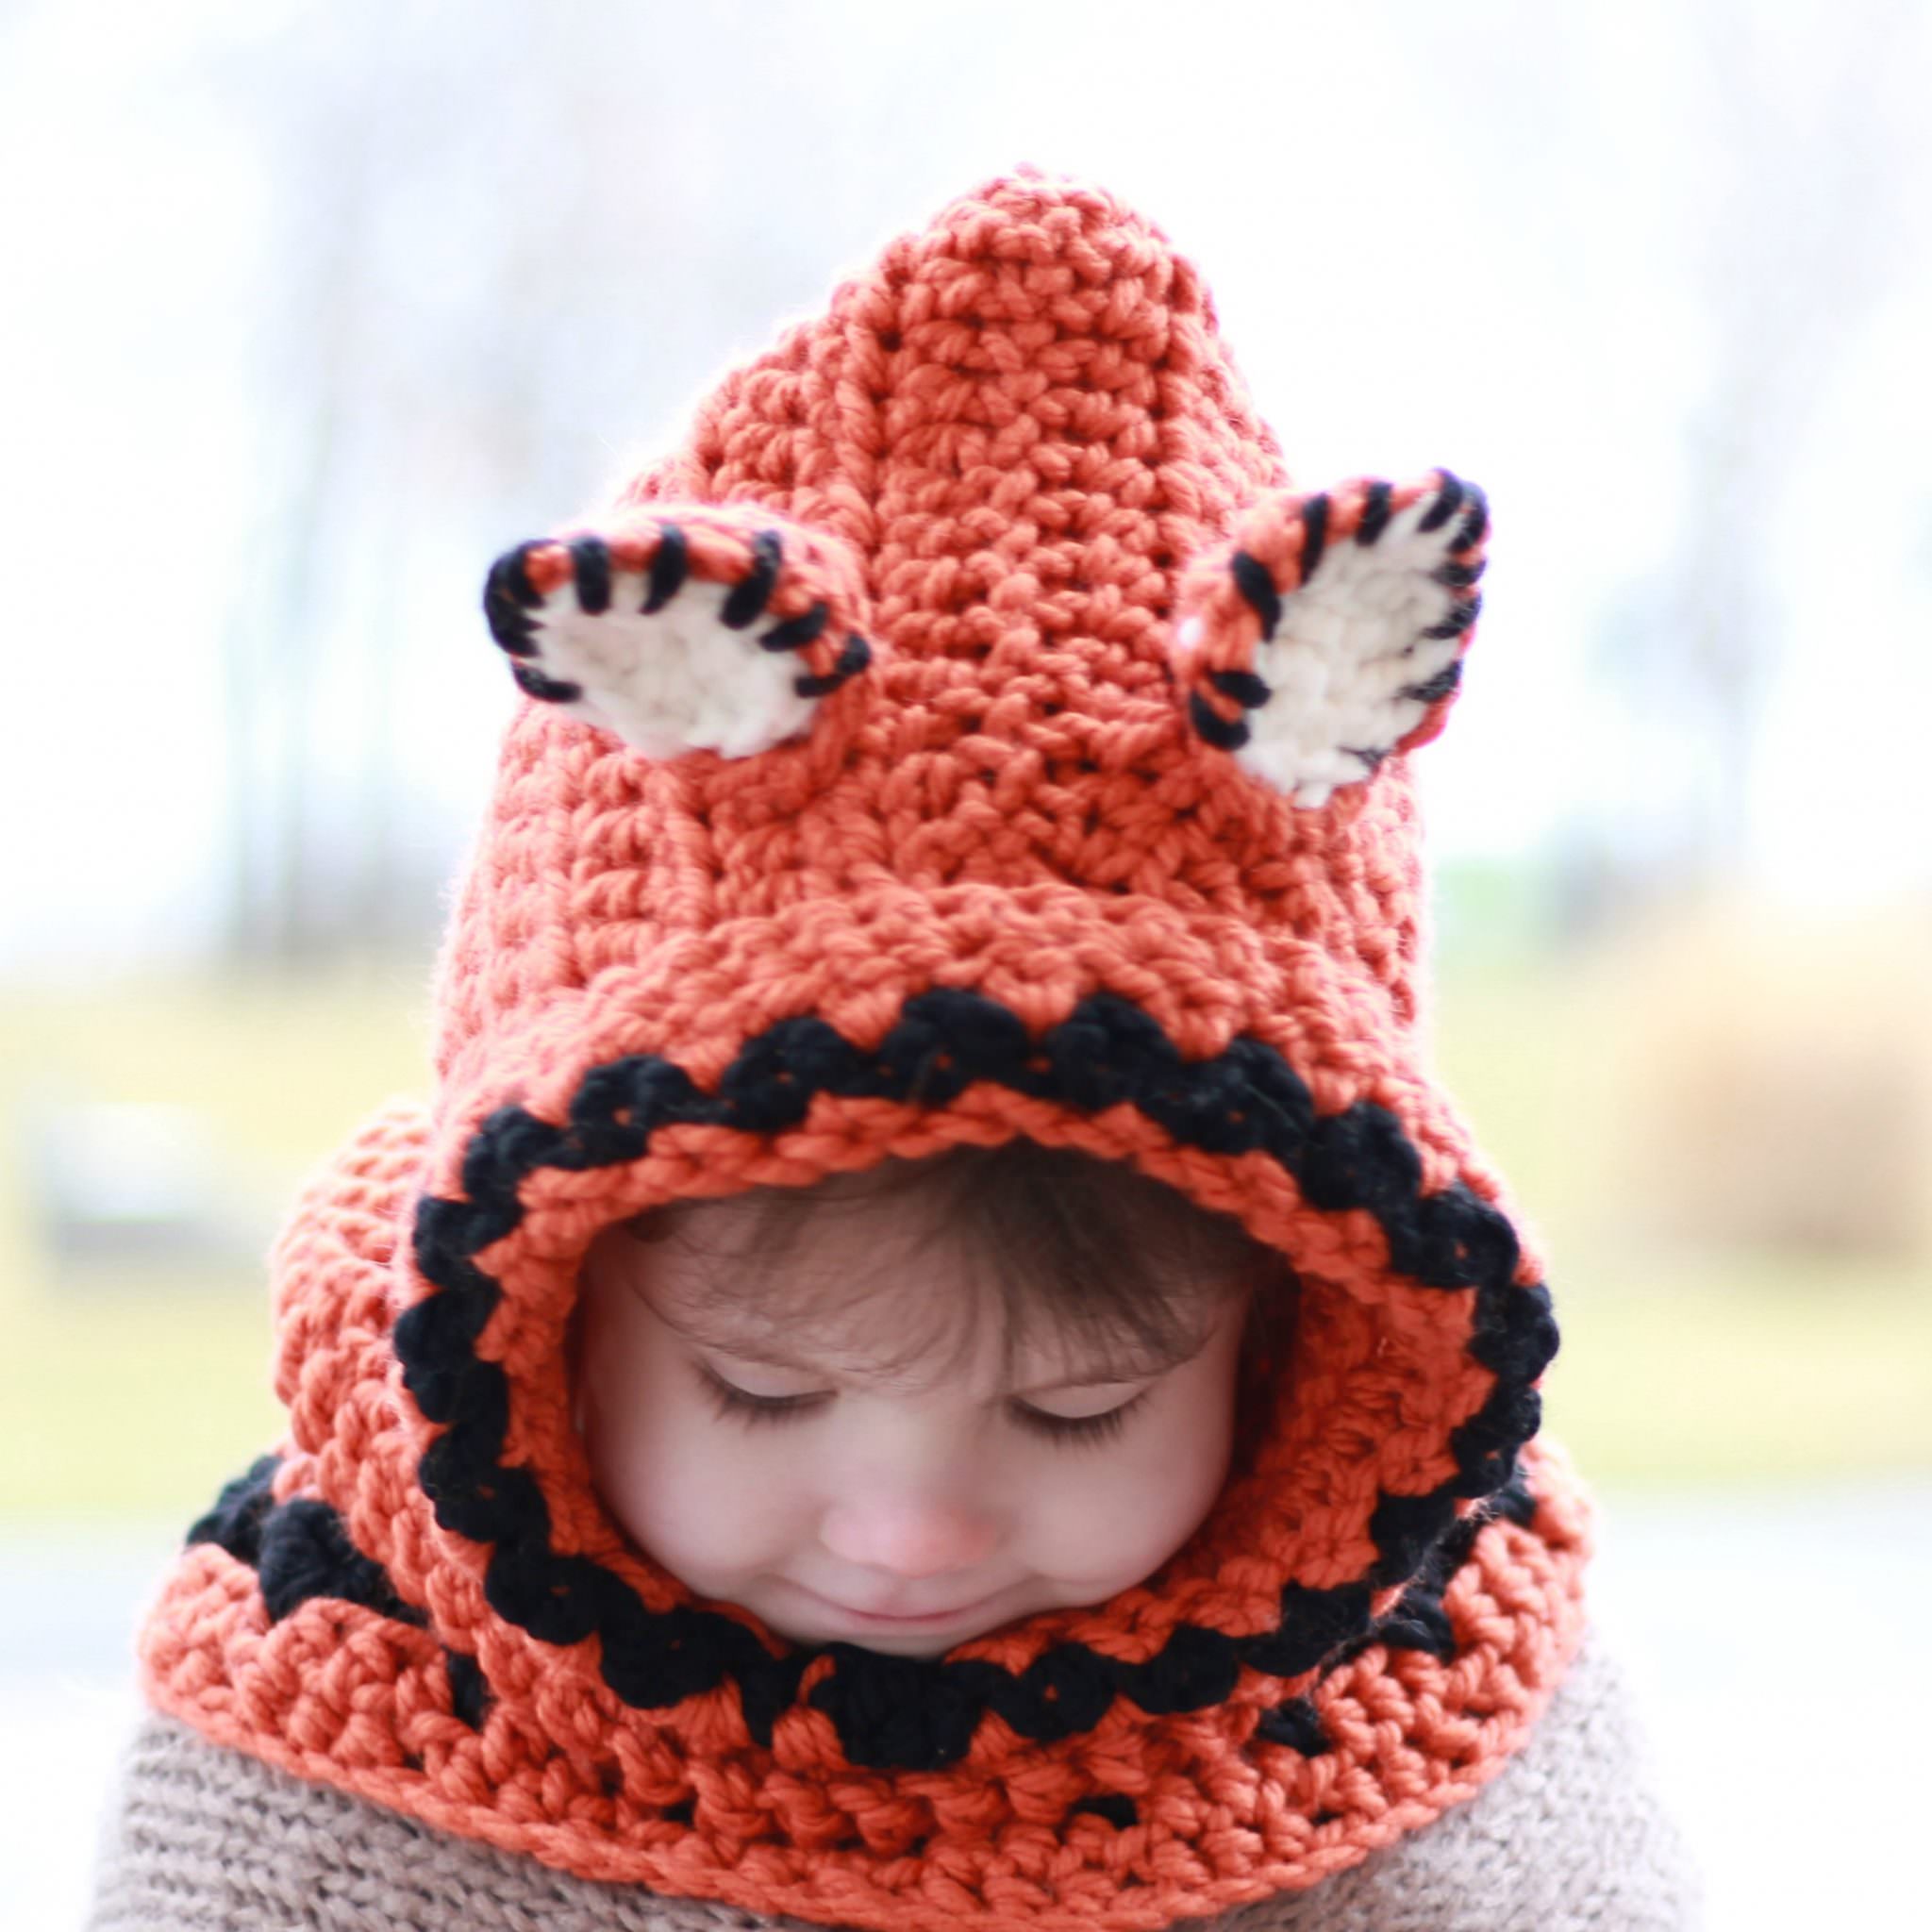 Crochet Pattern the Fáline Fox Hat and Cowl Set baby, Toddler, Child Sizes  -  Australia